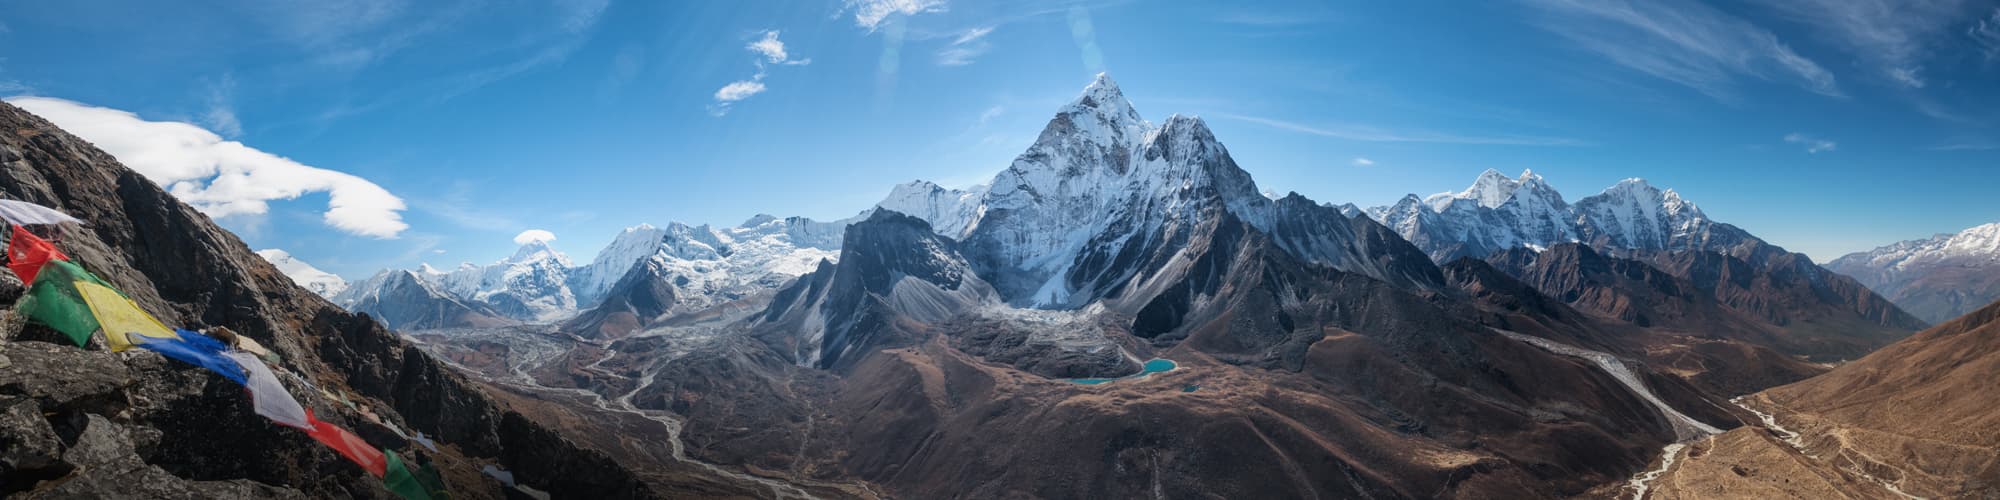 Voyage en groupe Inde Himalayenne © Alex Shestakov / Adobe Stock